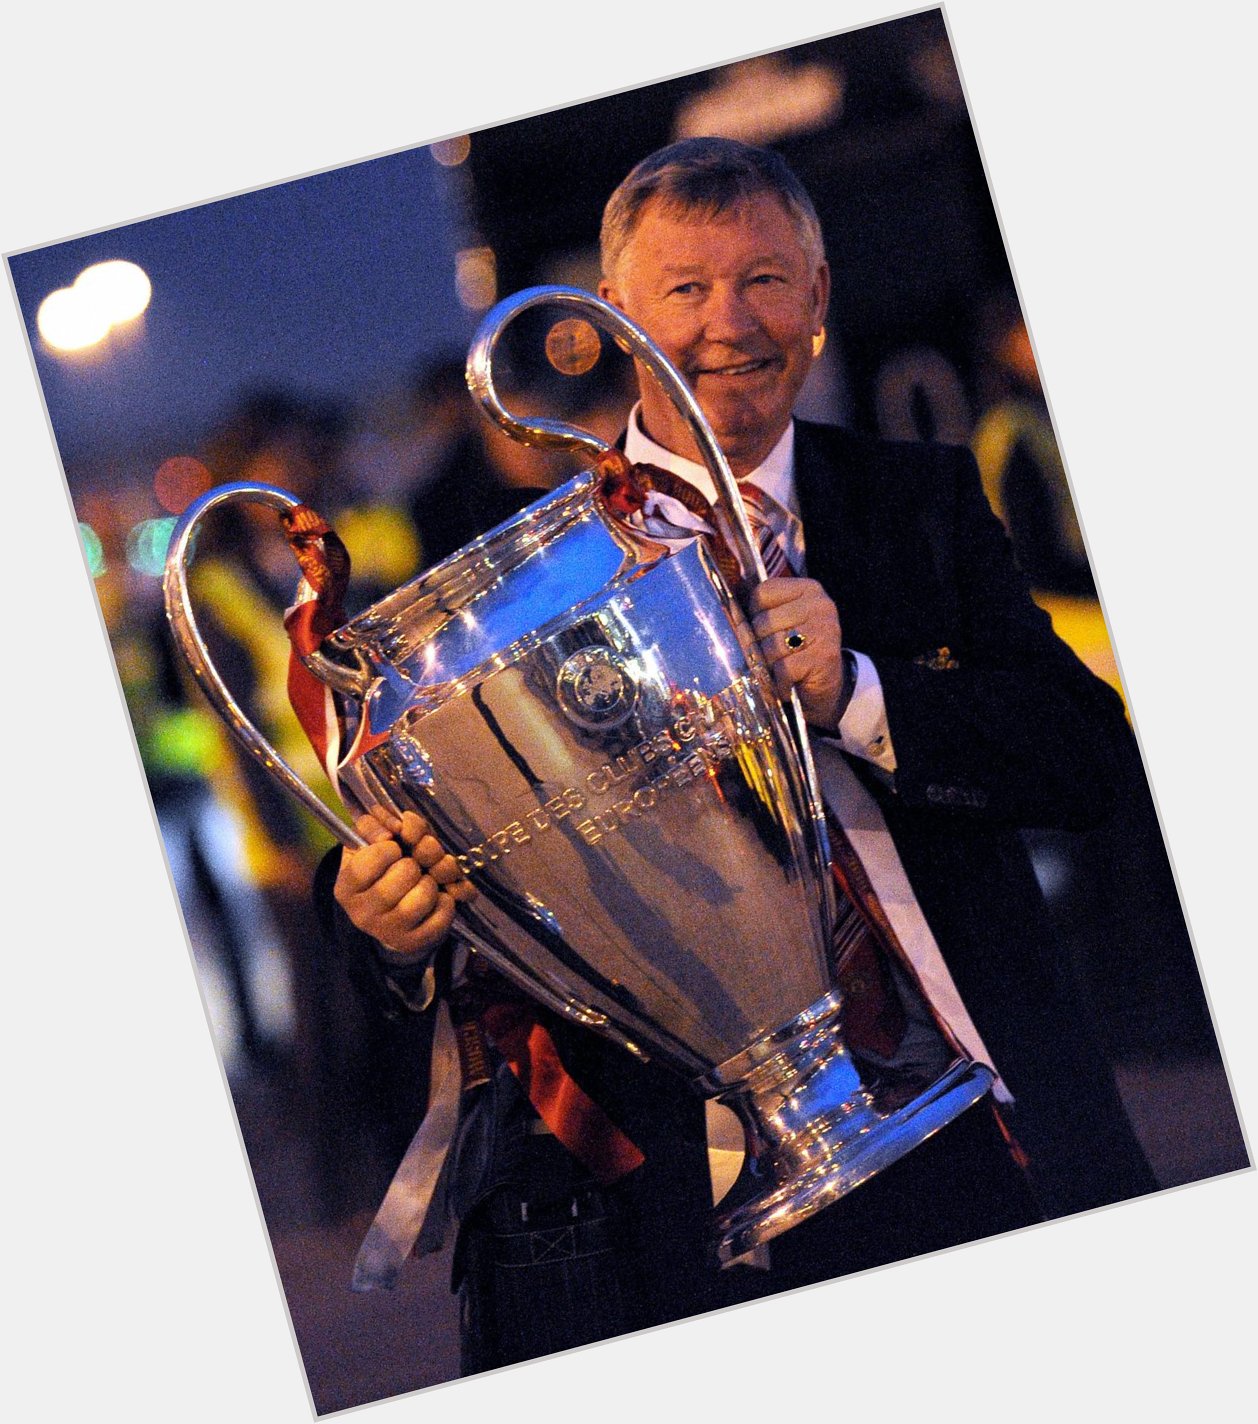 Happy birthday, two-time winner Sir Alex Ferguson! 